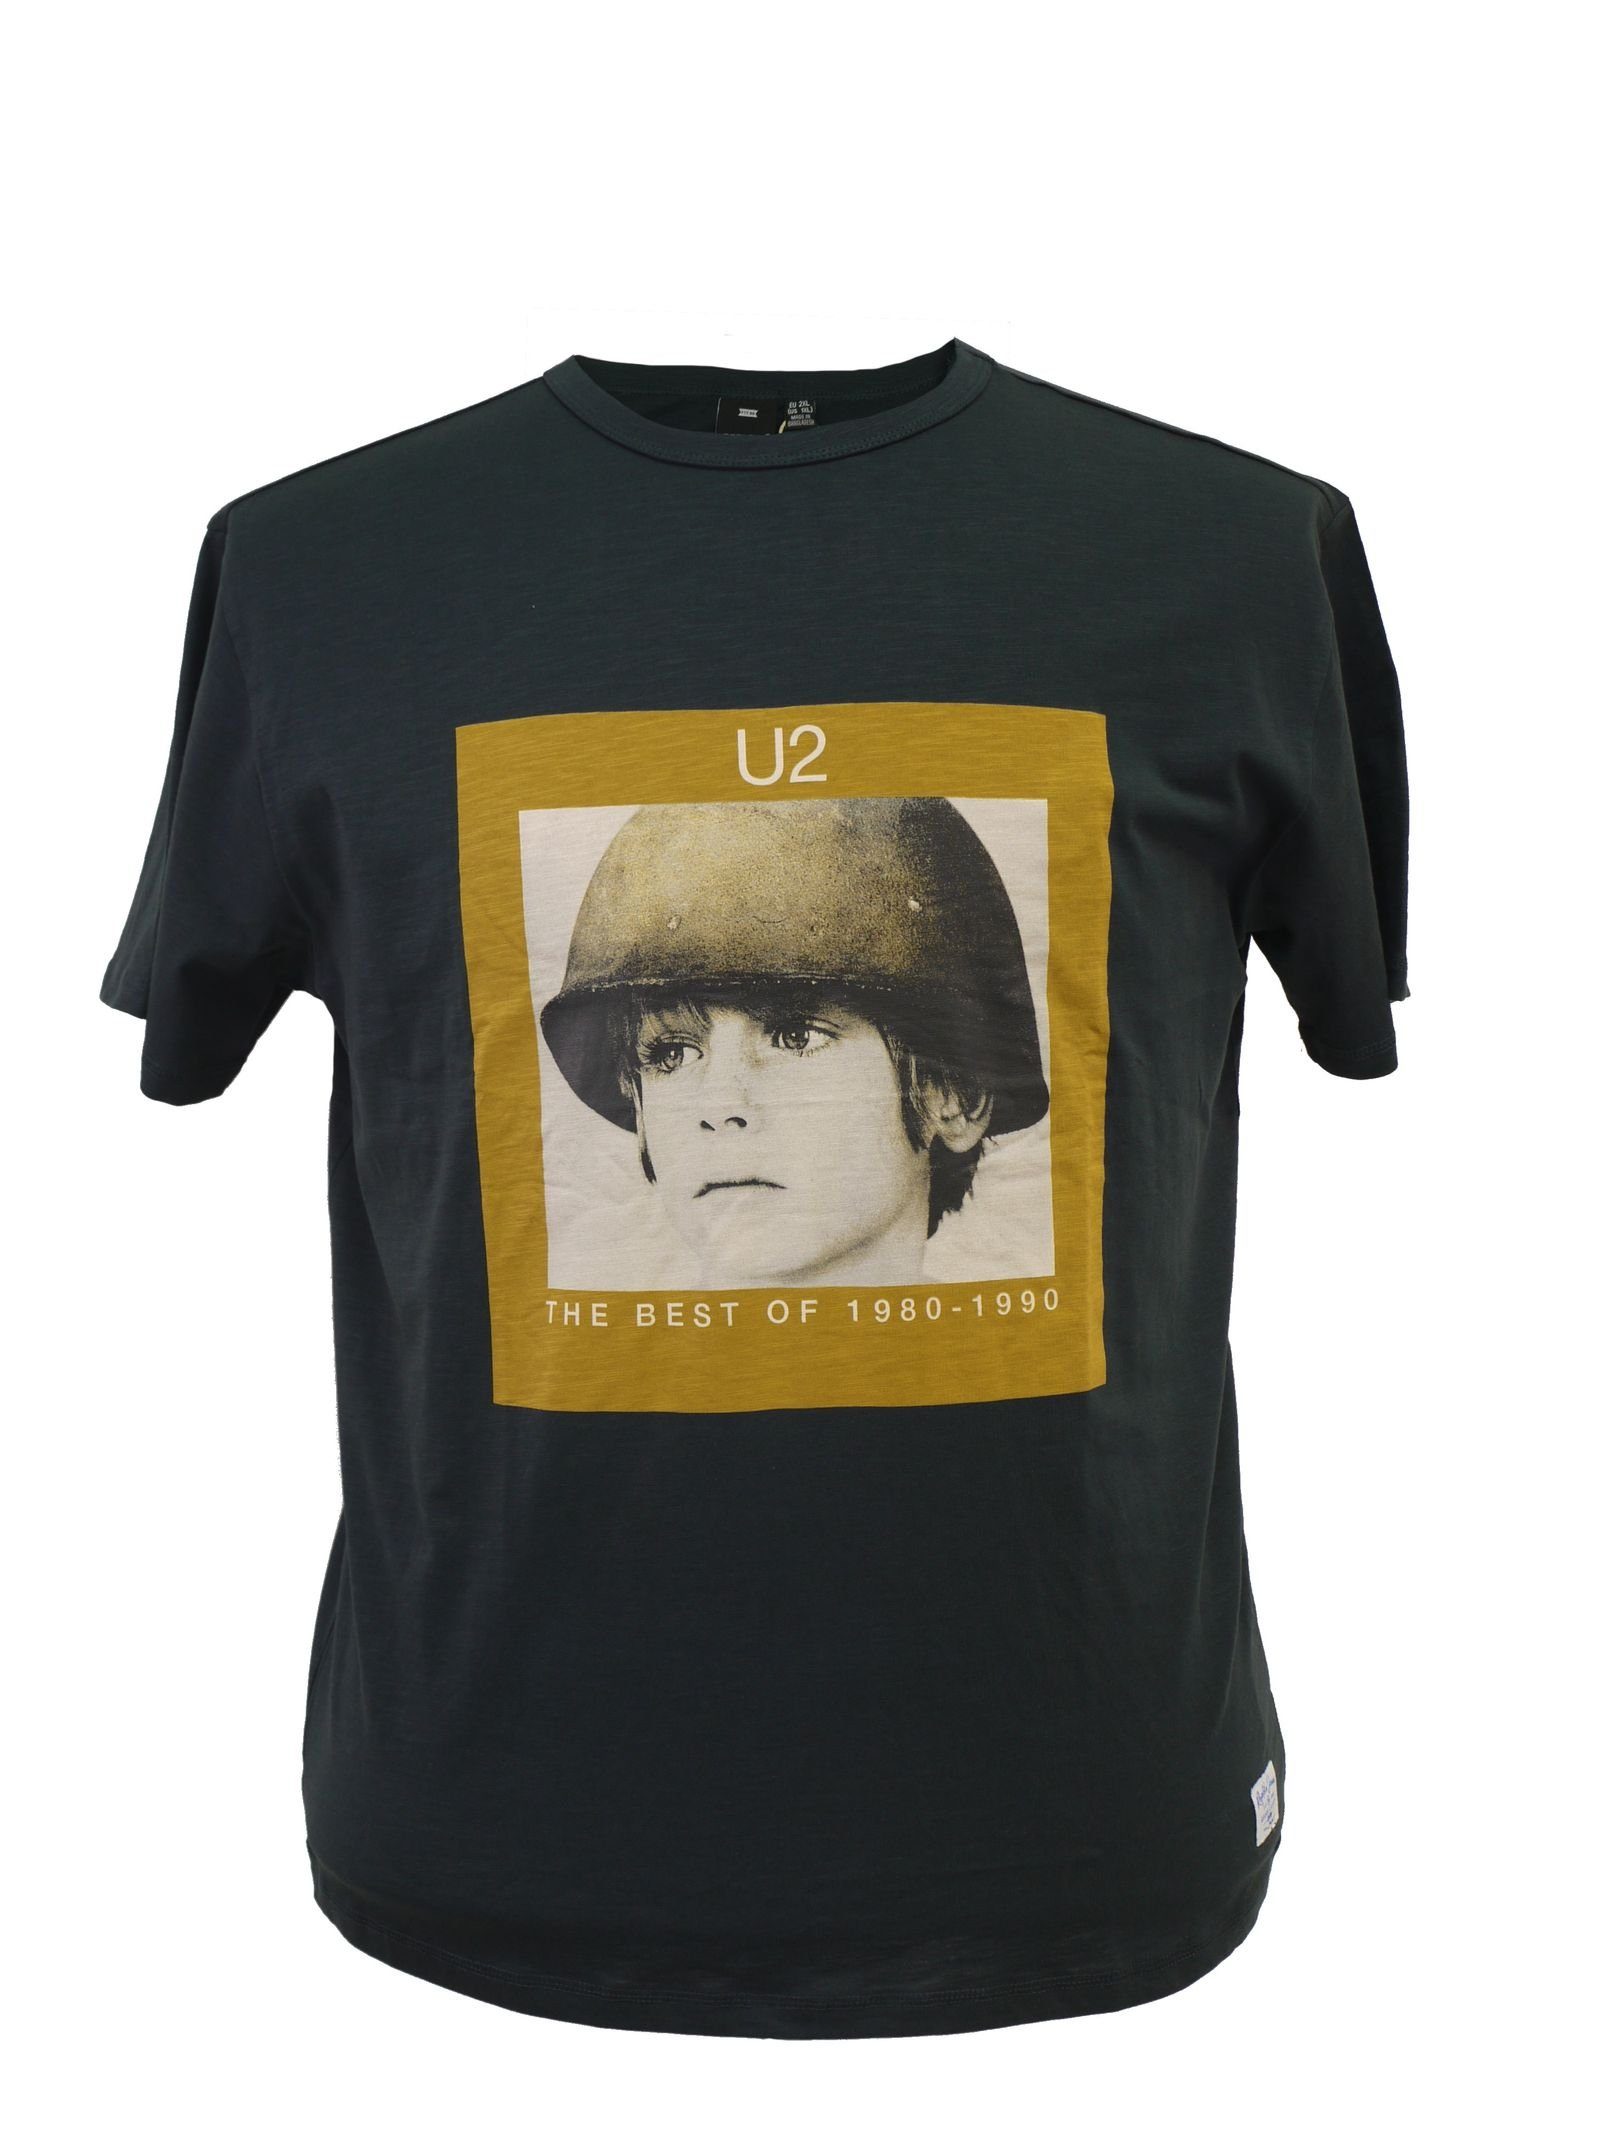 "THE Shirt 1980-1990 Replika U2 XXL BEST T-Shirt OF" replika